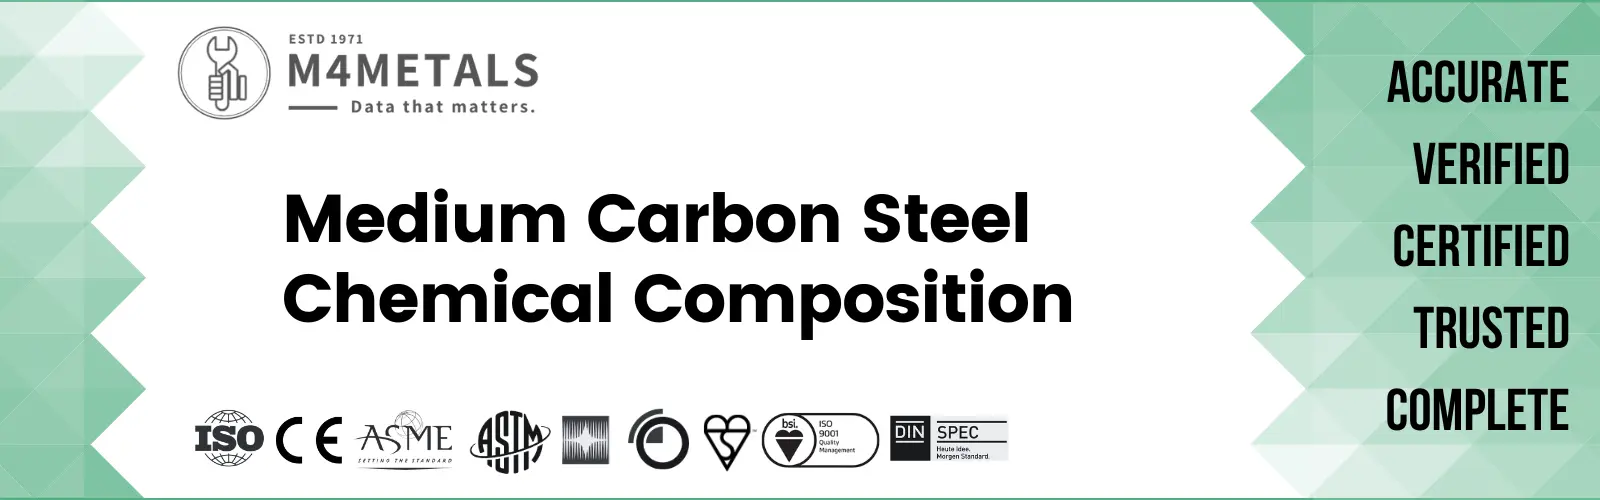 Medium Carbon Steel Chemical Composition